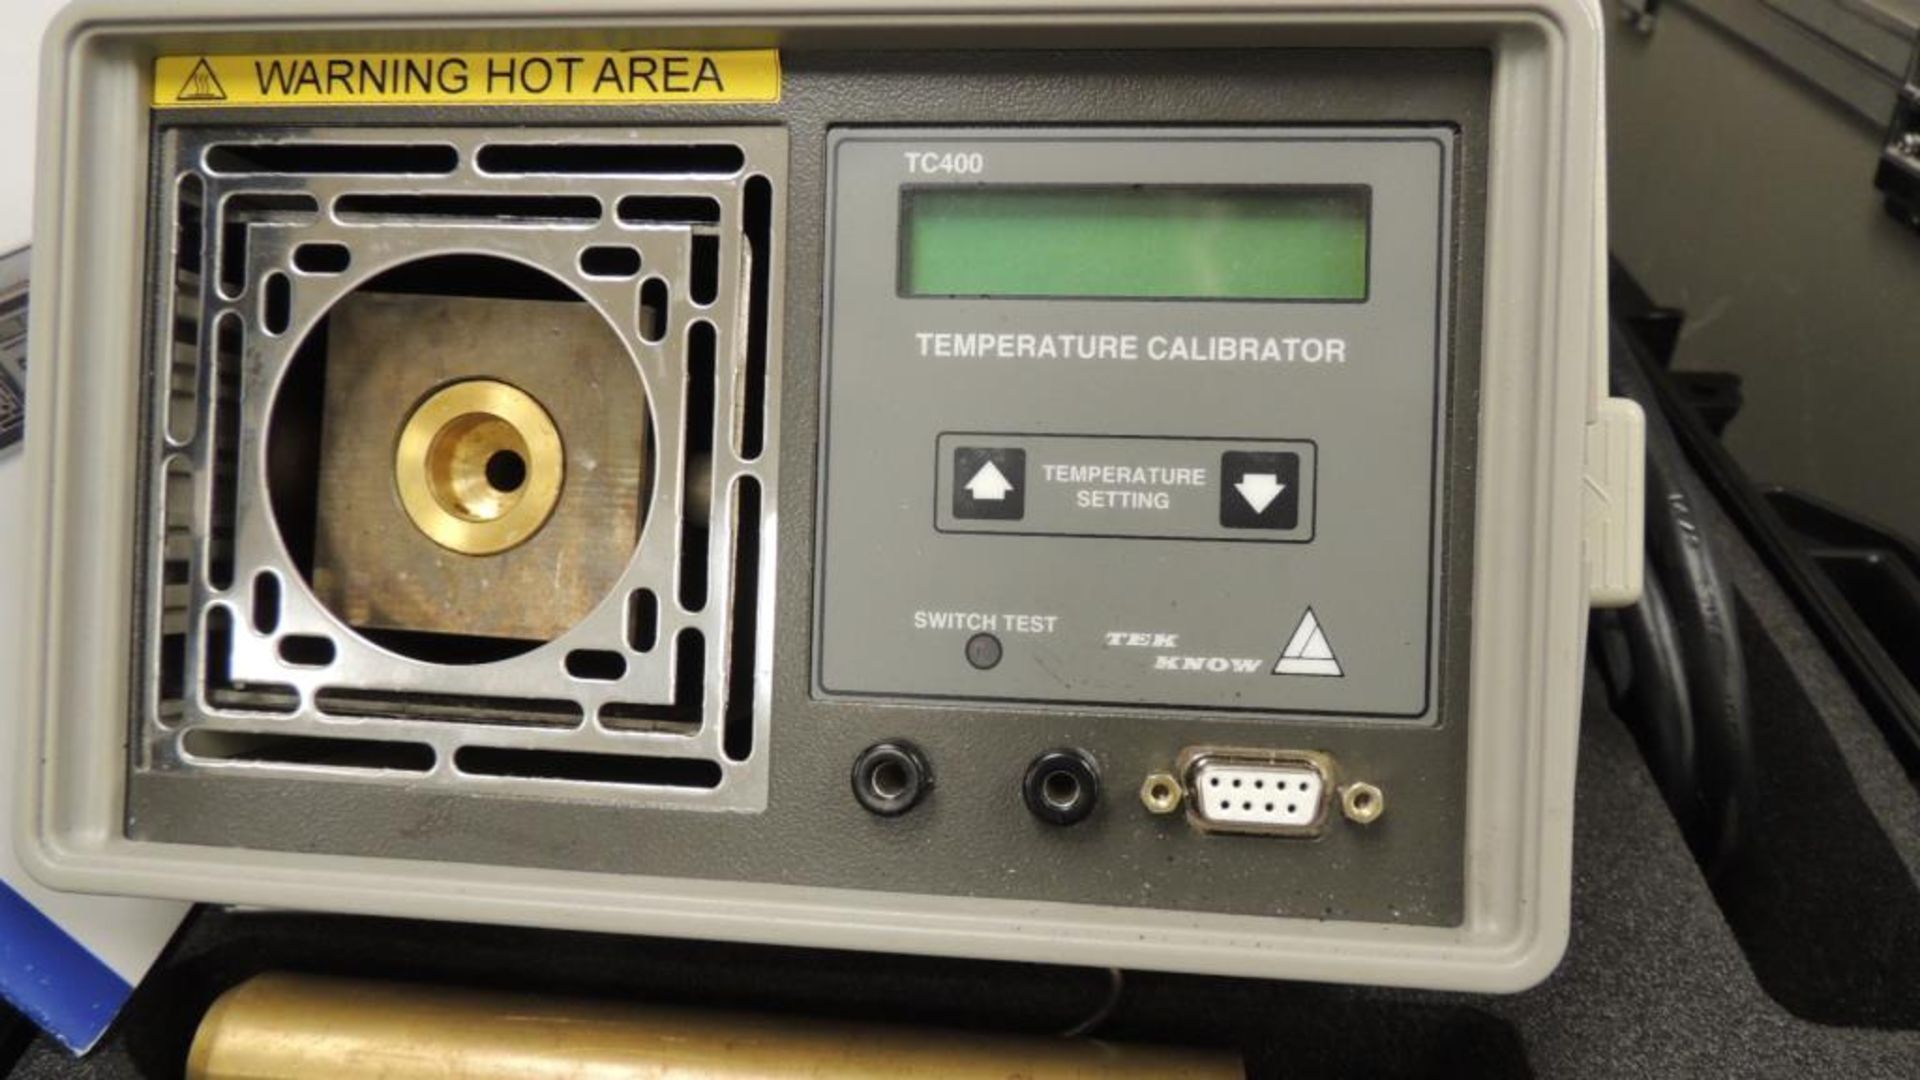 TEK KNOW TC400 Calibrator; temperature calibrator, Max. 400 C, 115v. HIT# 2226576. Loc: 710. Asset - Image 3 of 6